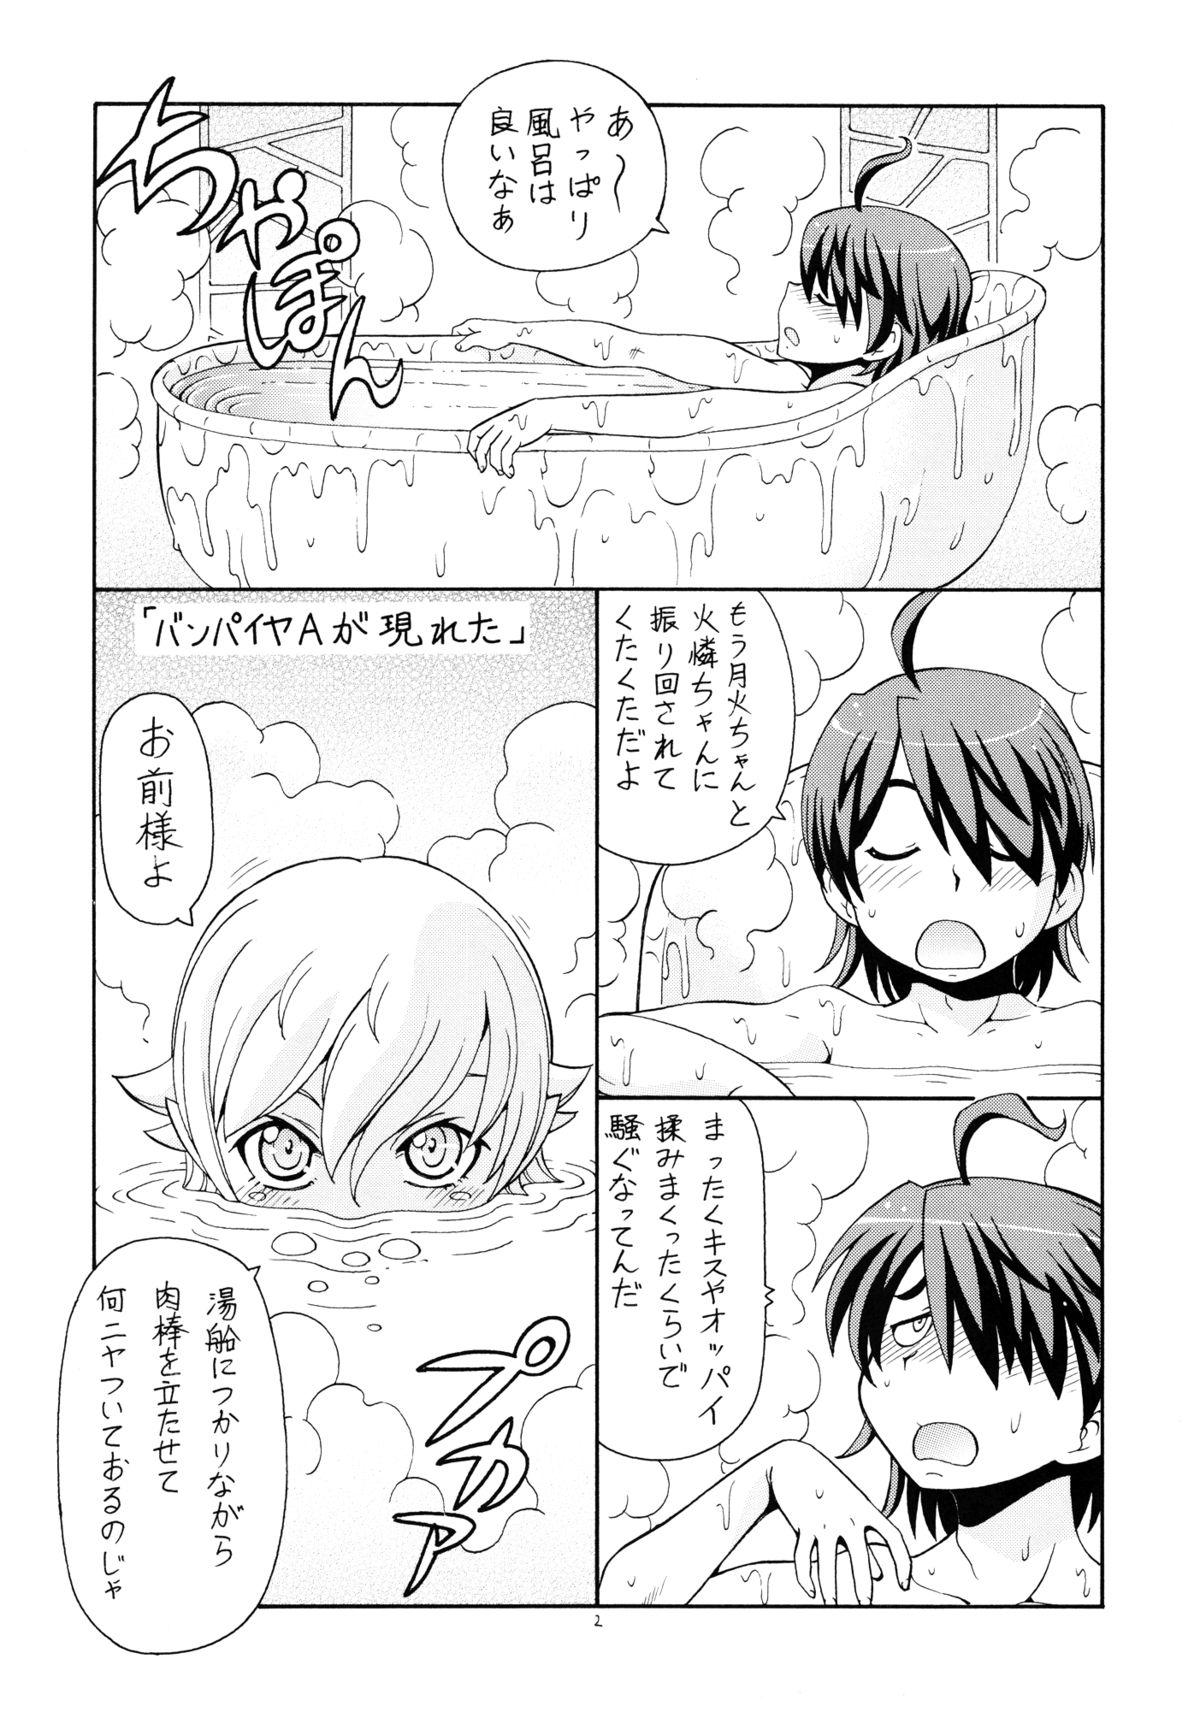 18yearsold Hito ni Hakanai to Kaite "Araragi" to Yomu 5&6 - Bakemonogatari Mature - Page 3